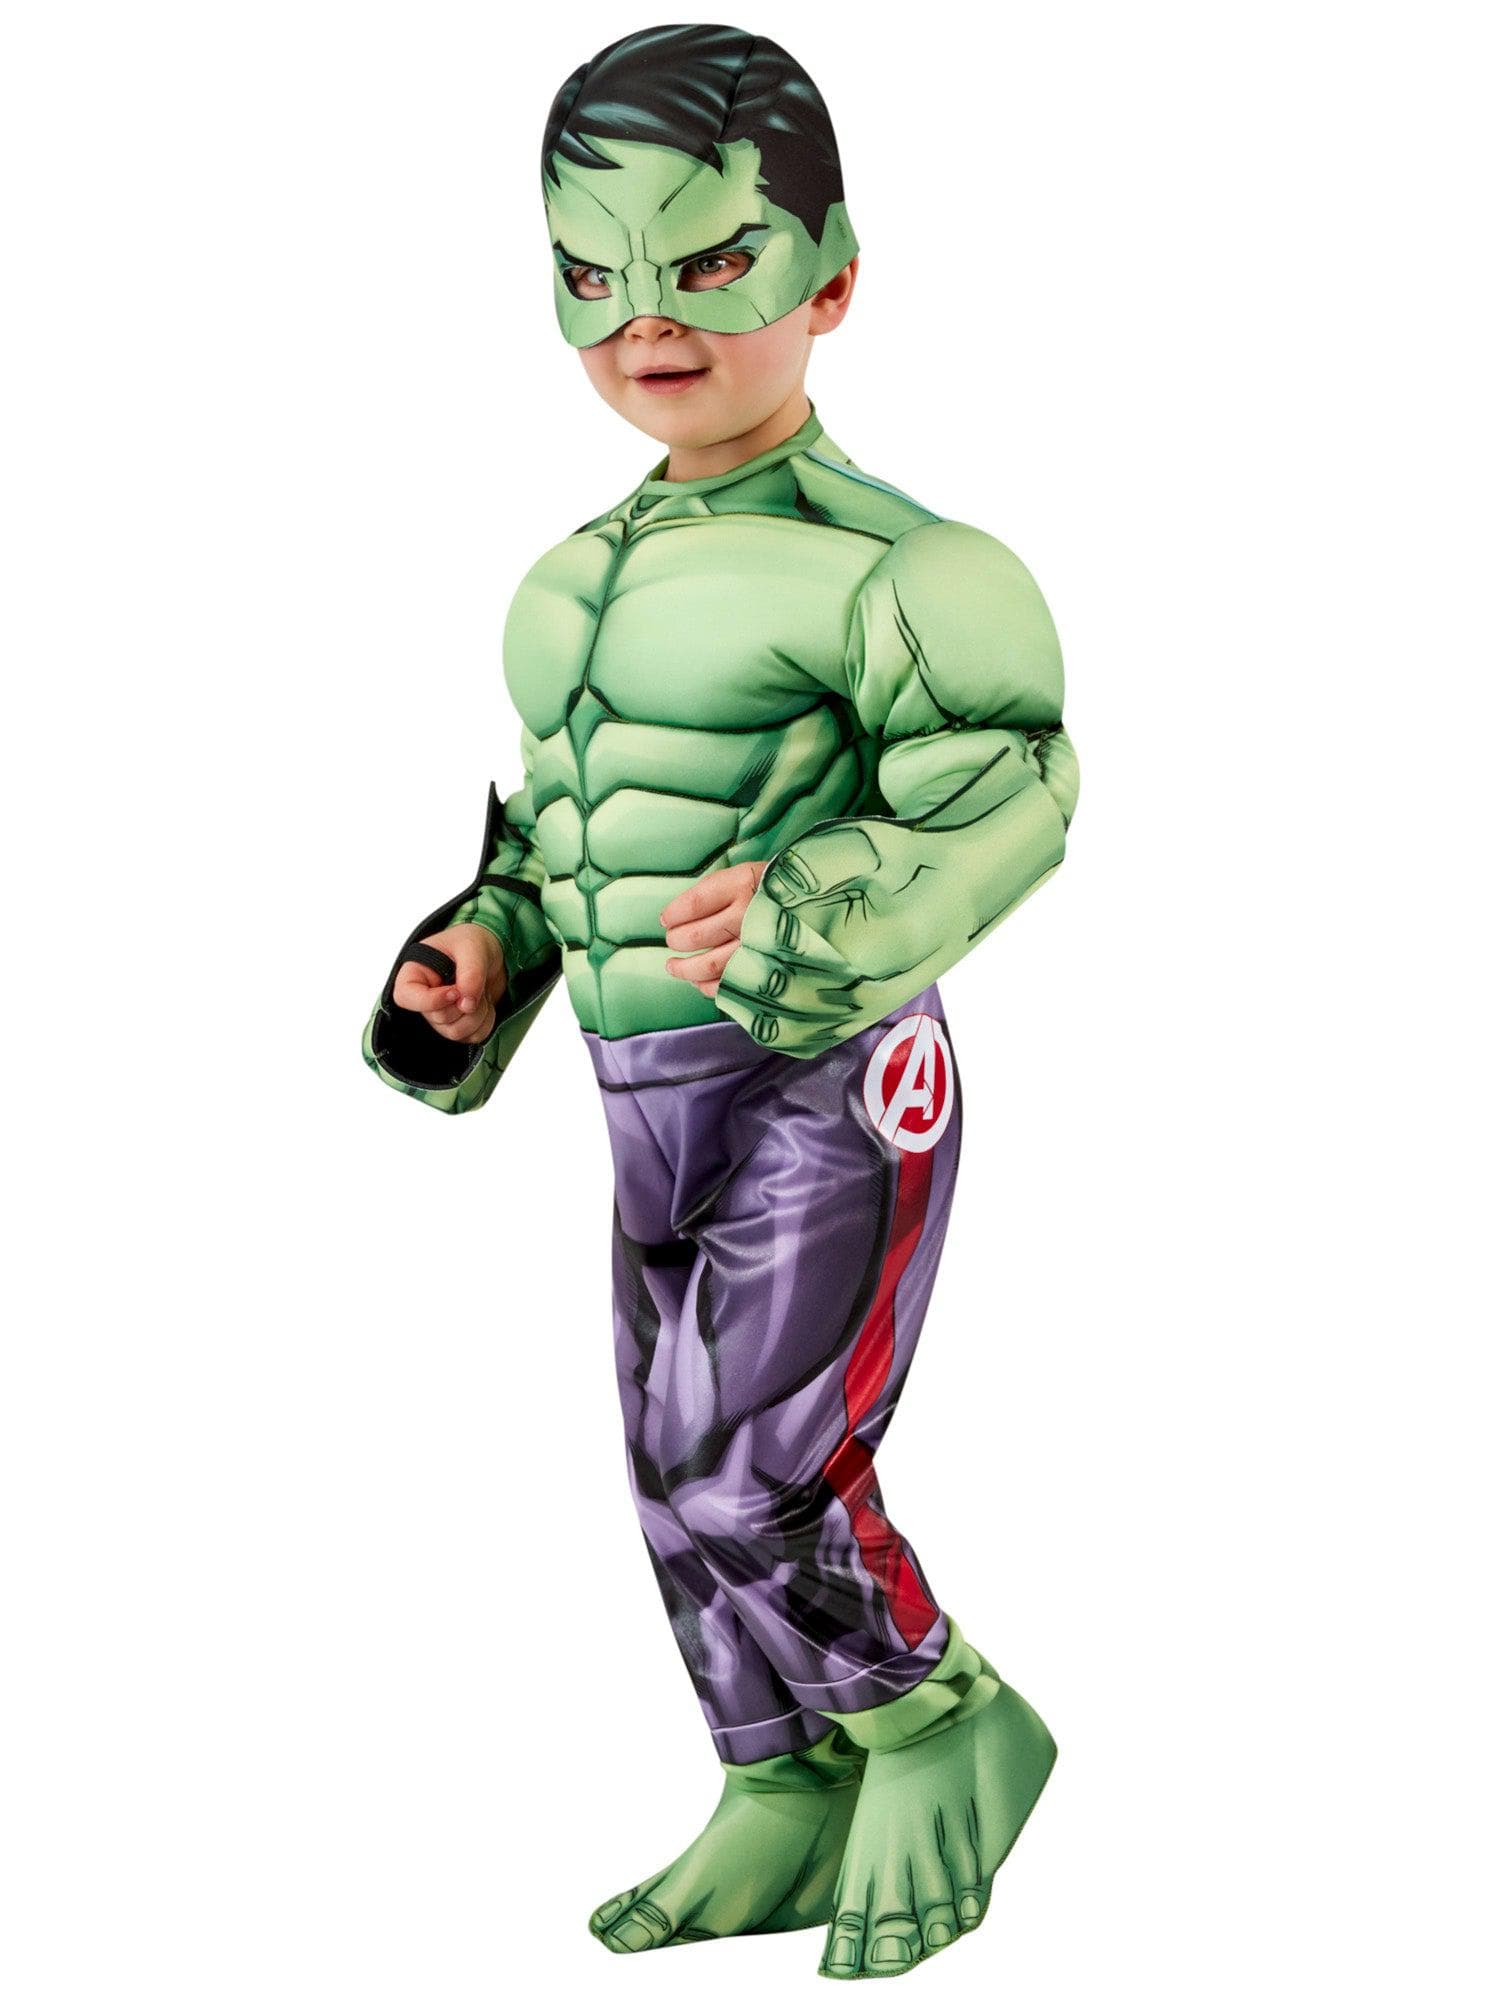 Hulk Toddler Costume - costumes.com